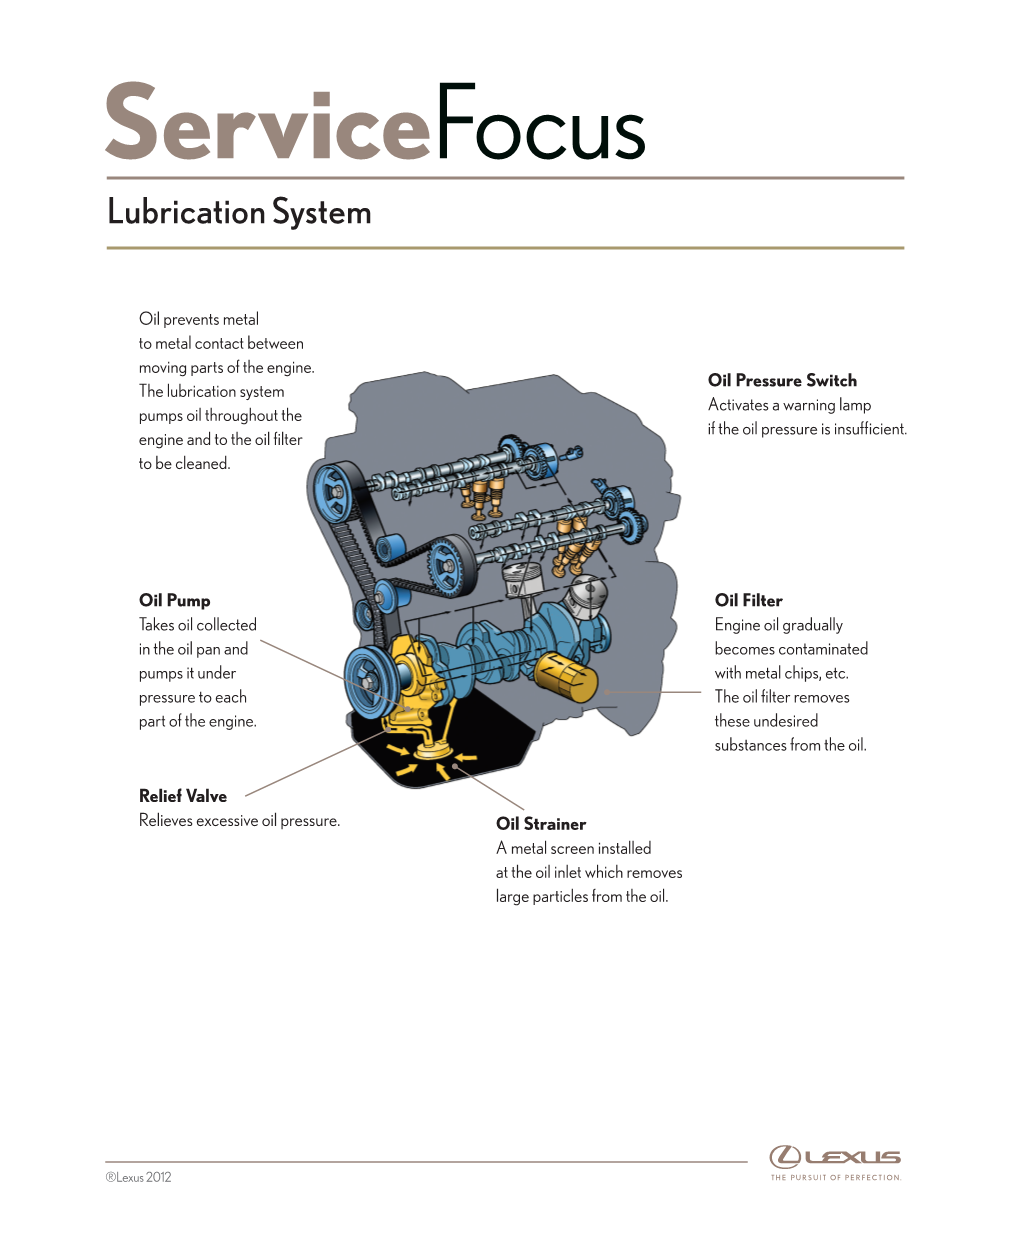 Servicefocus Lubrication System